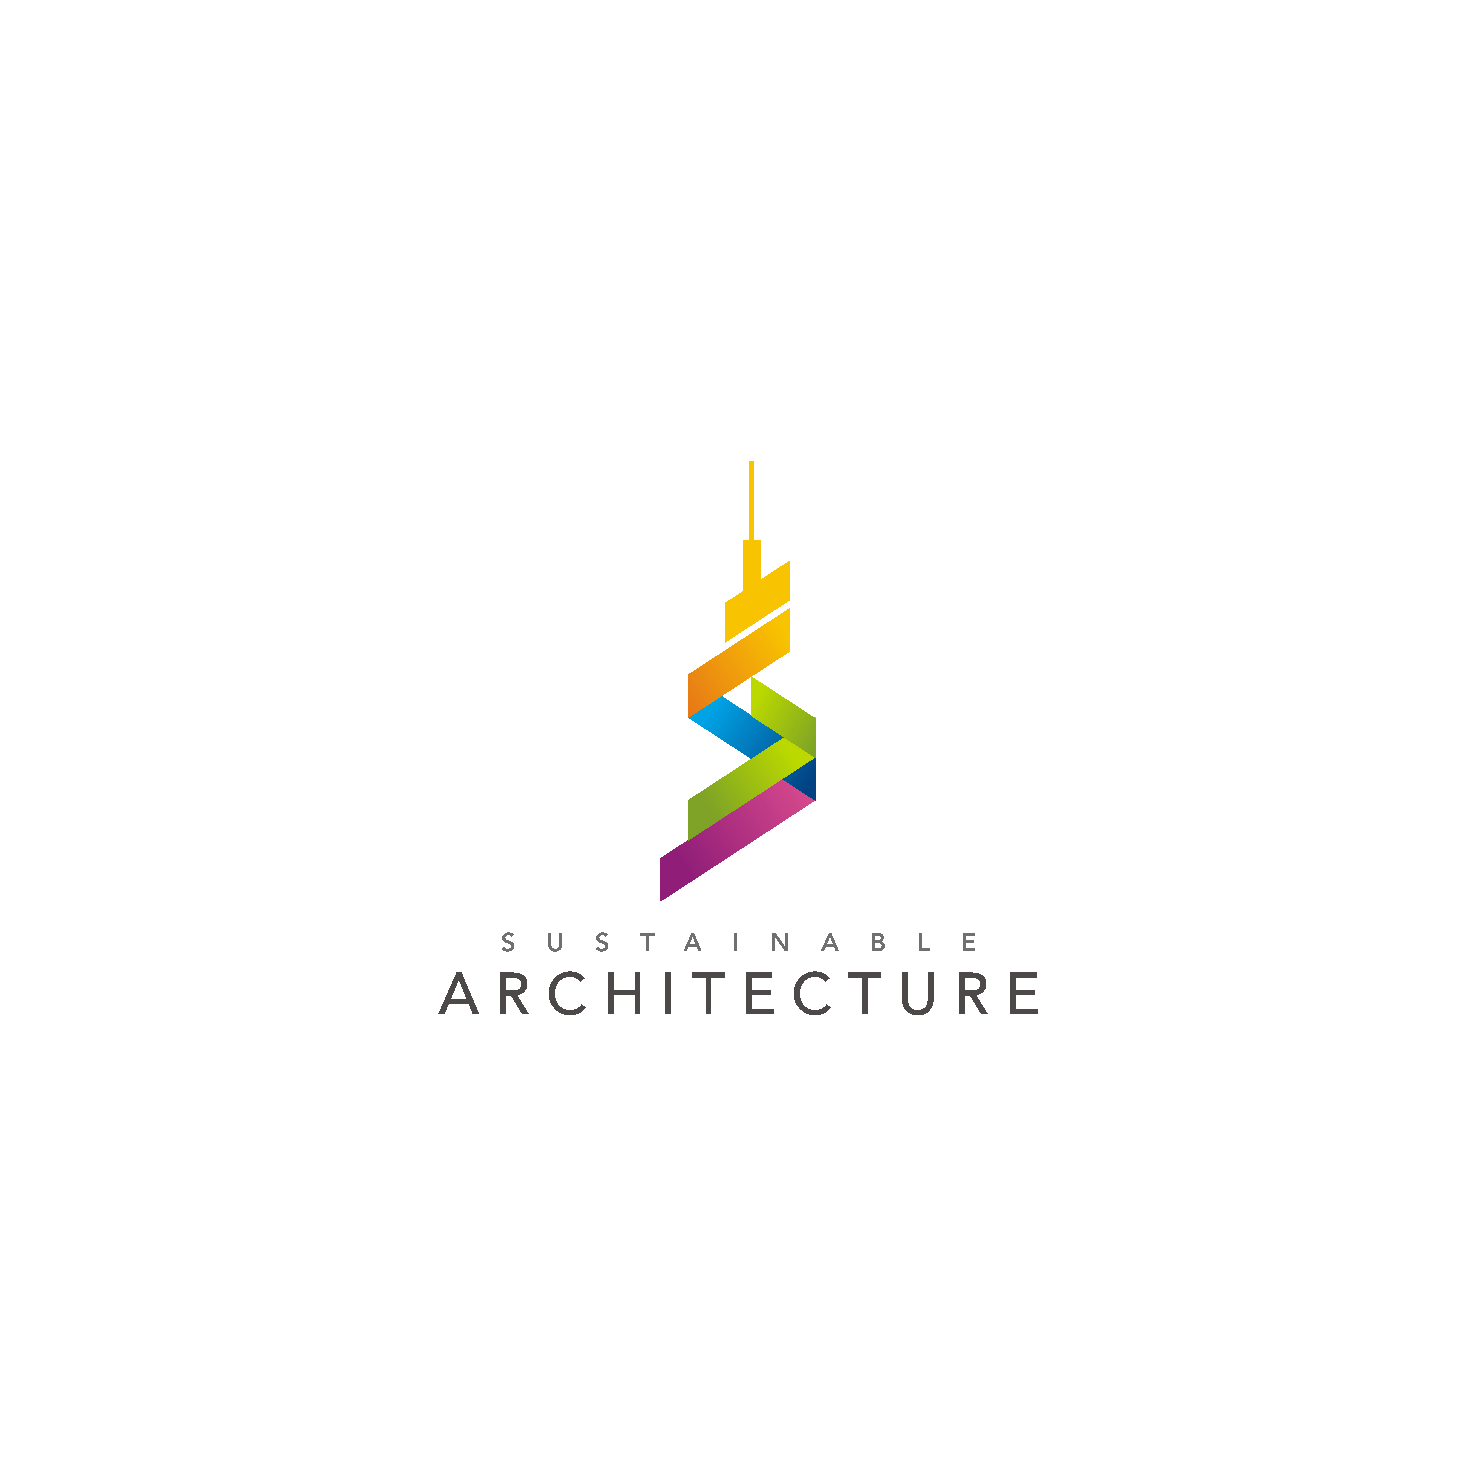 Architecture Logo - Architecture logo … | Architecture | Pinterest | Architecture logo ...